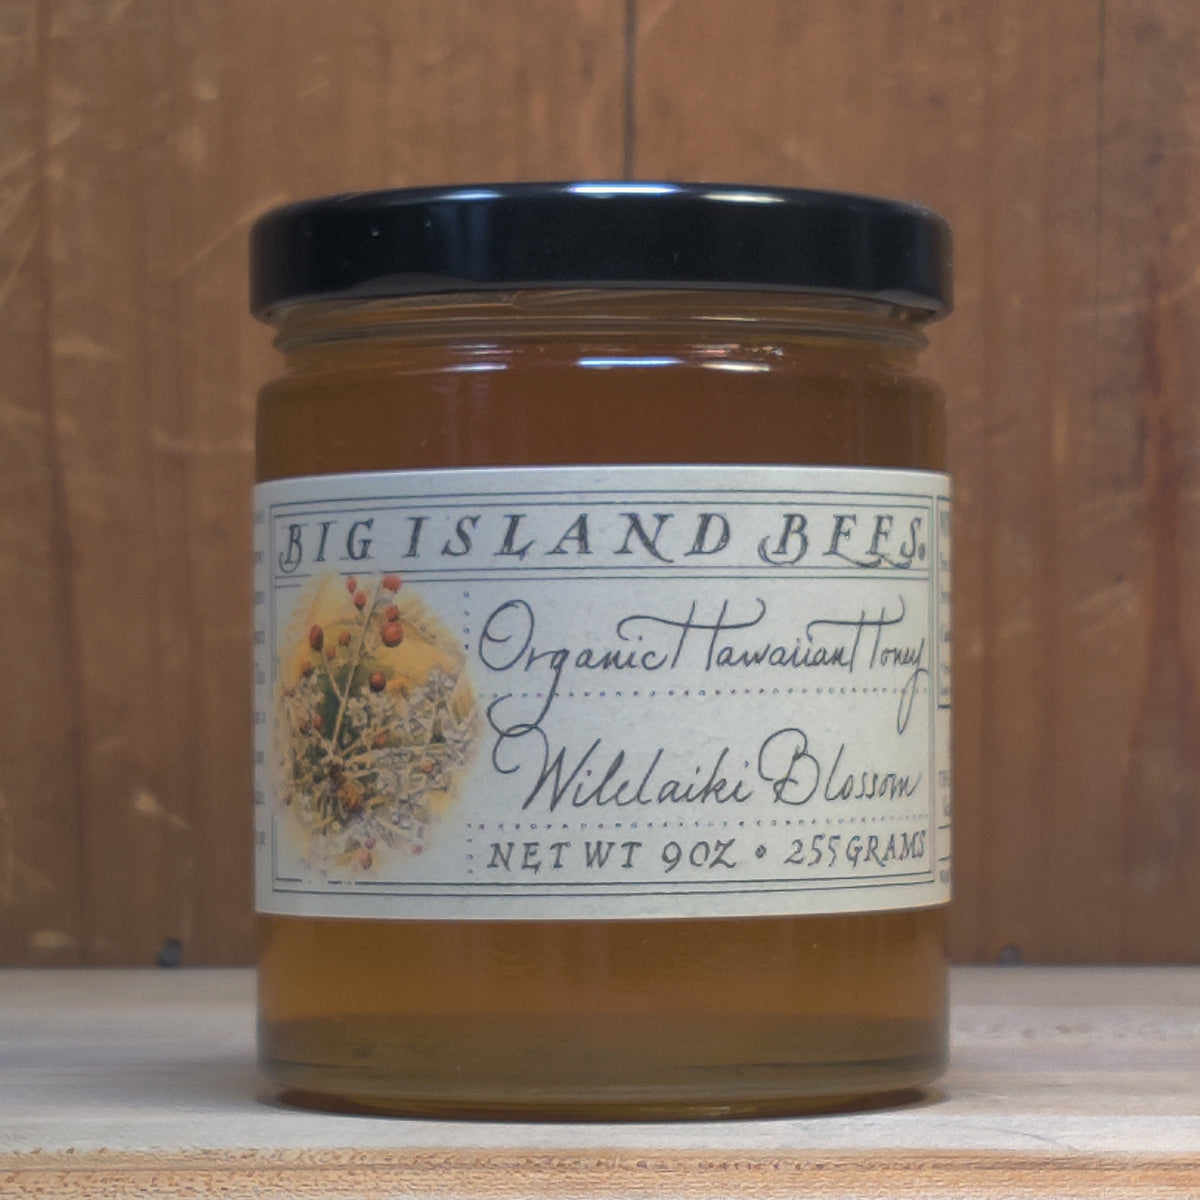 Big Island Bees Organic Wilelaiki Blossom Honey - 9oz